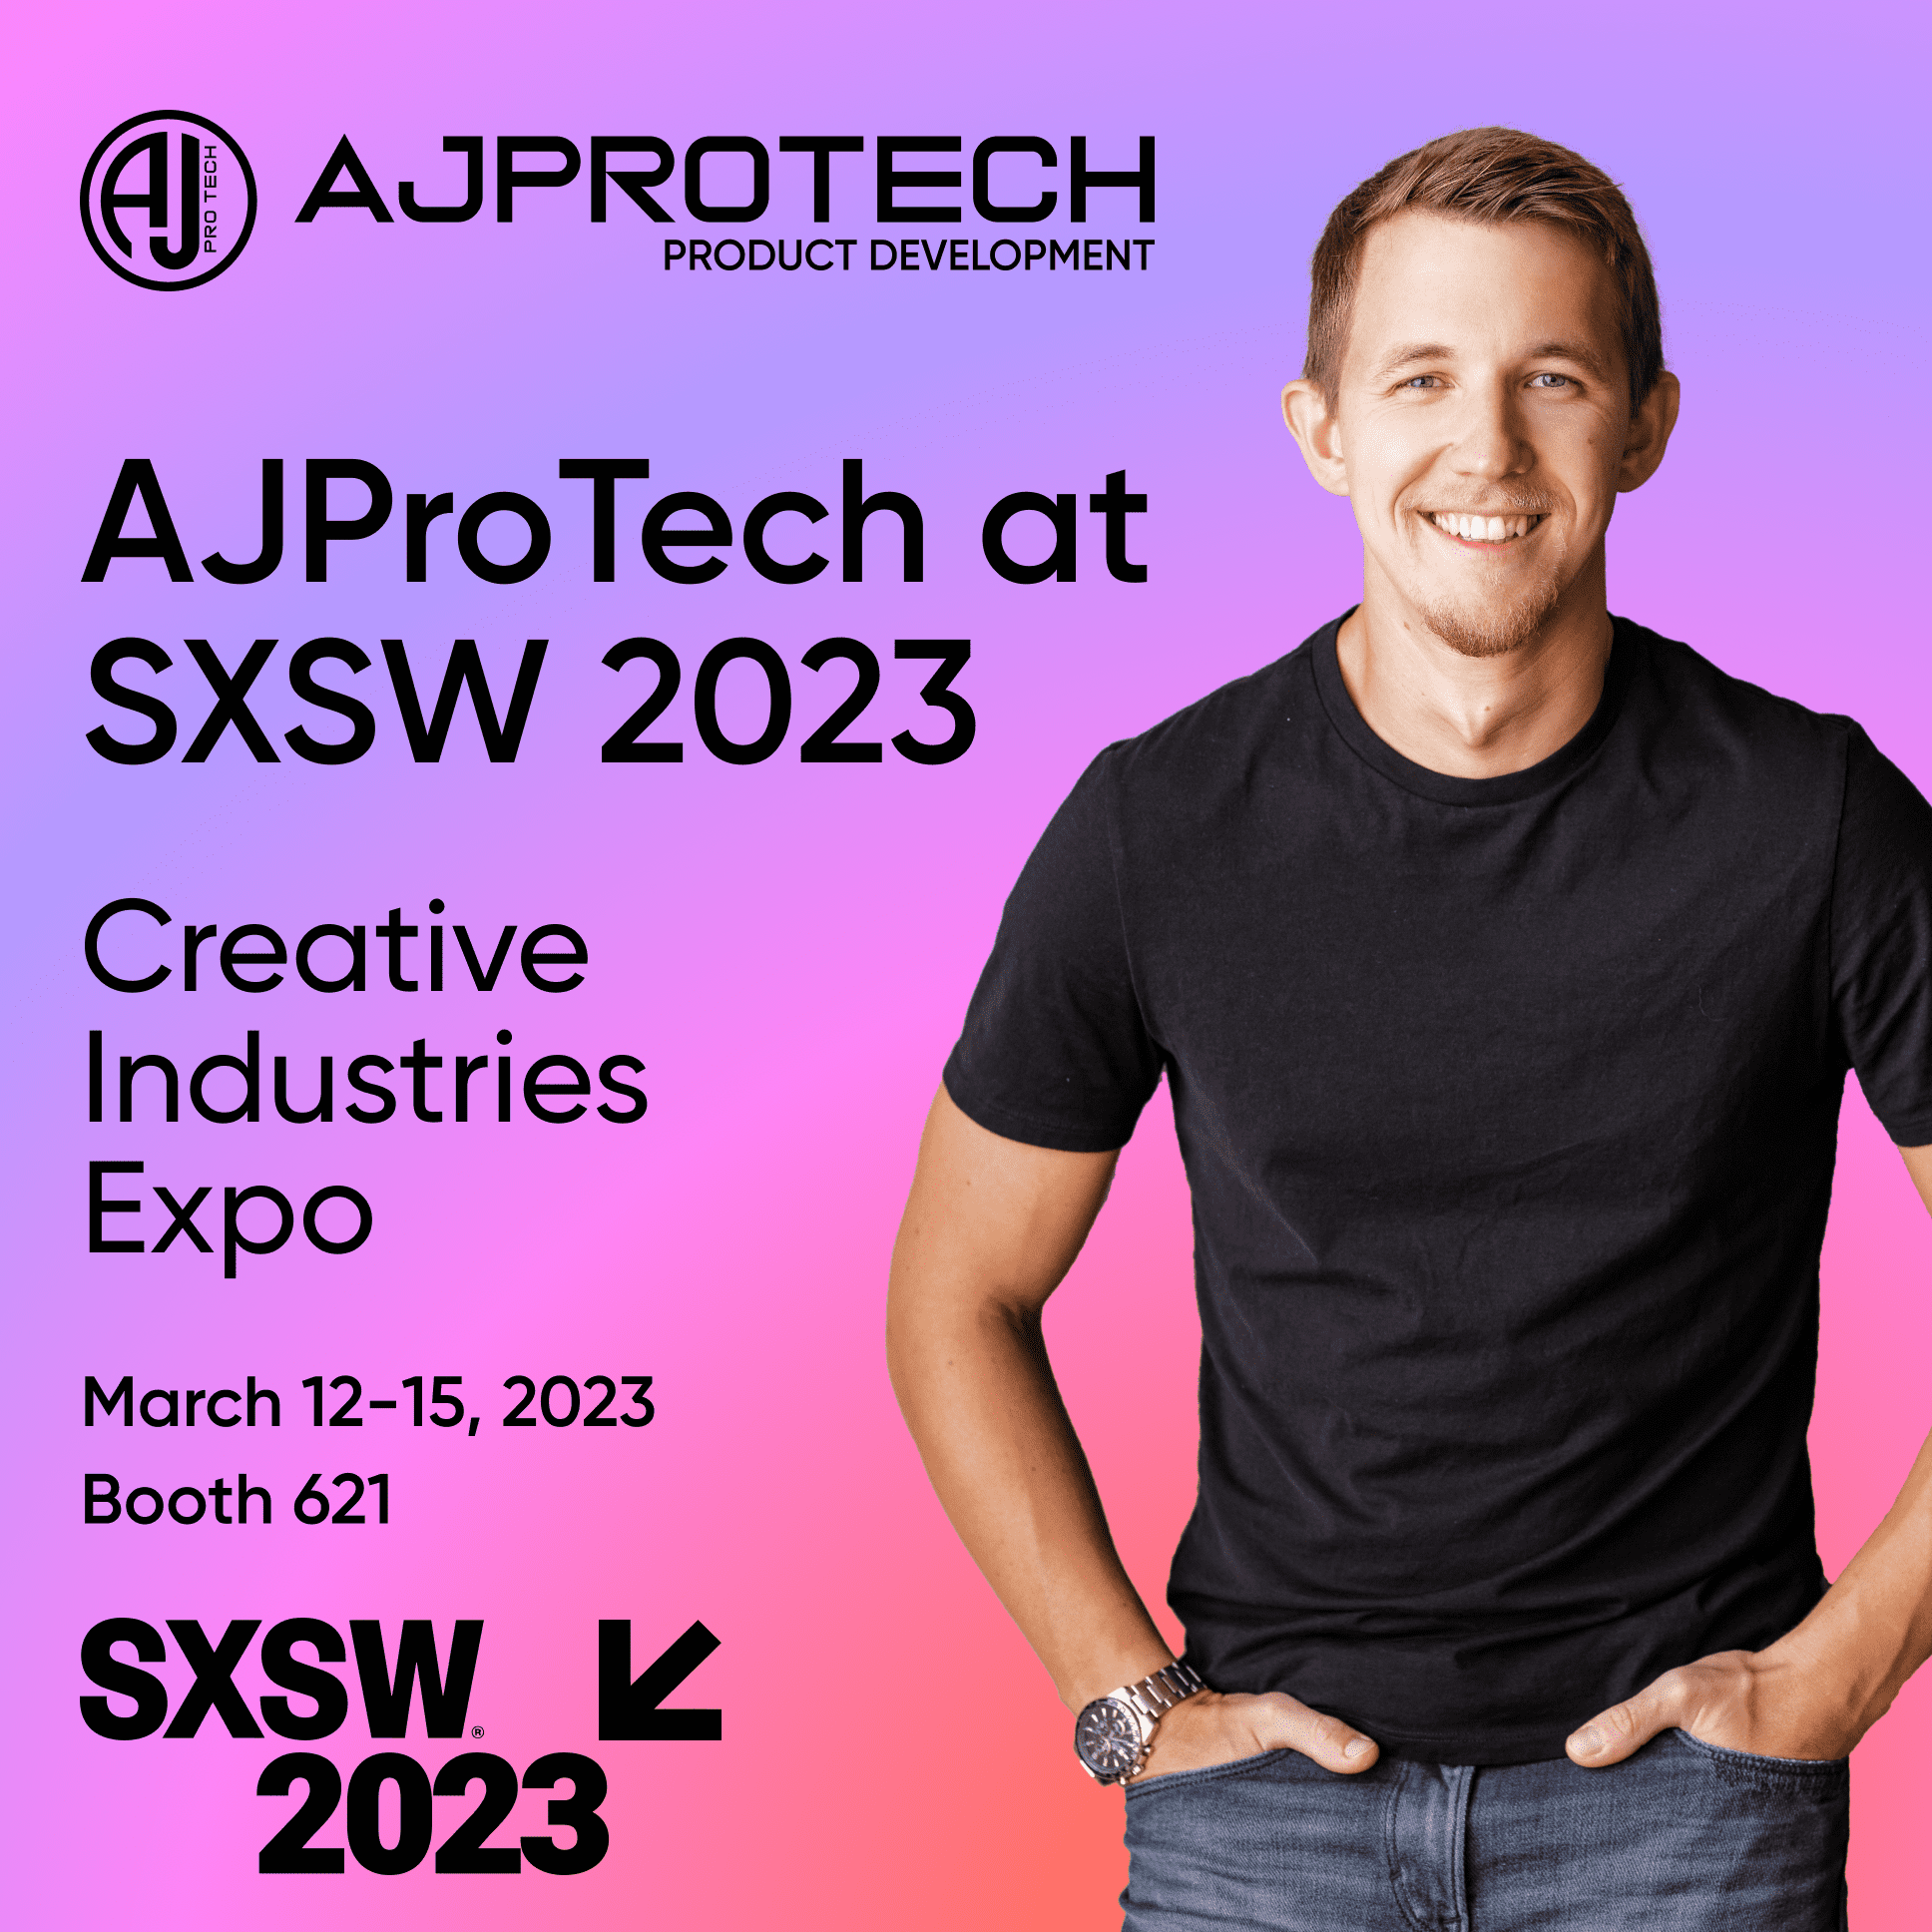 AJProTech, hardware product development studio, will exhibit at SXSW in Austin